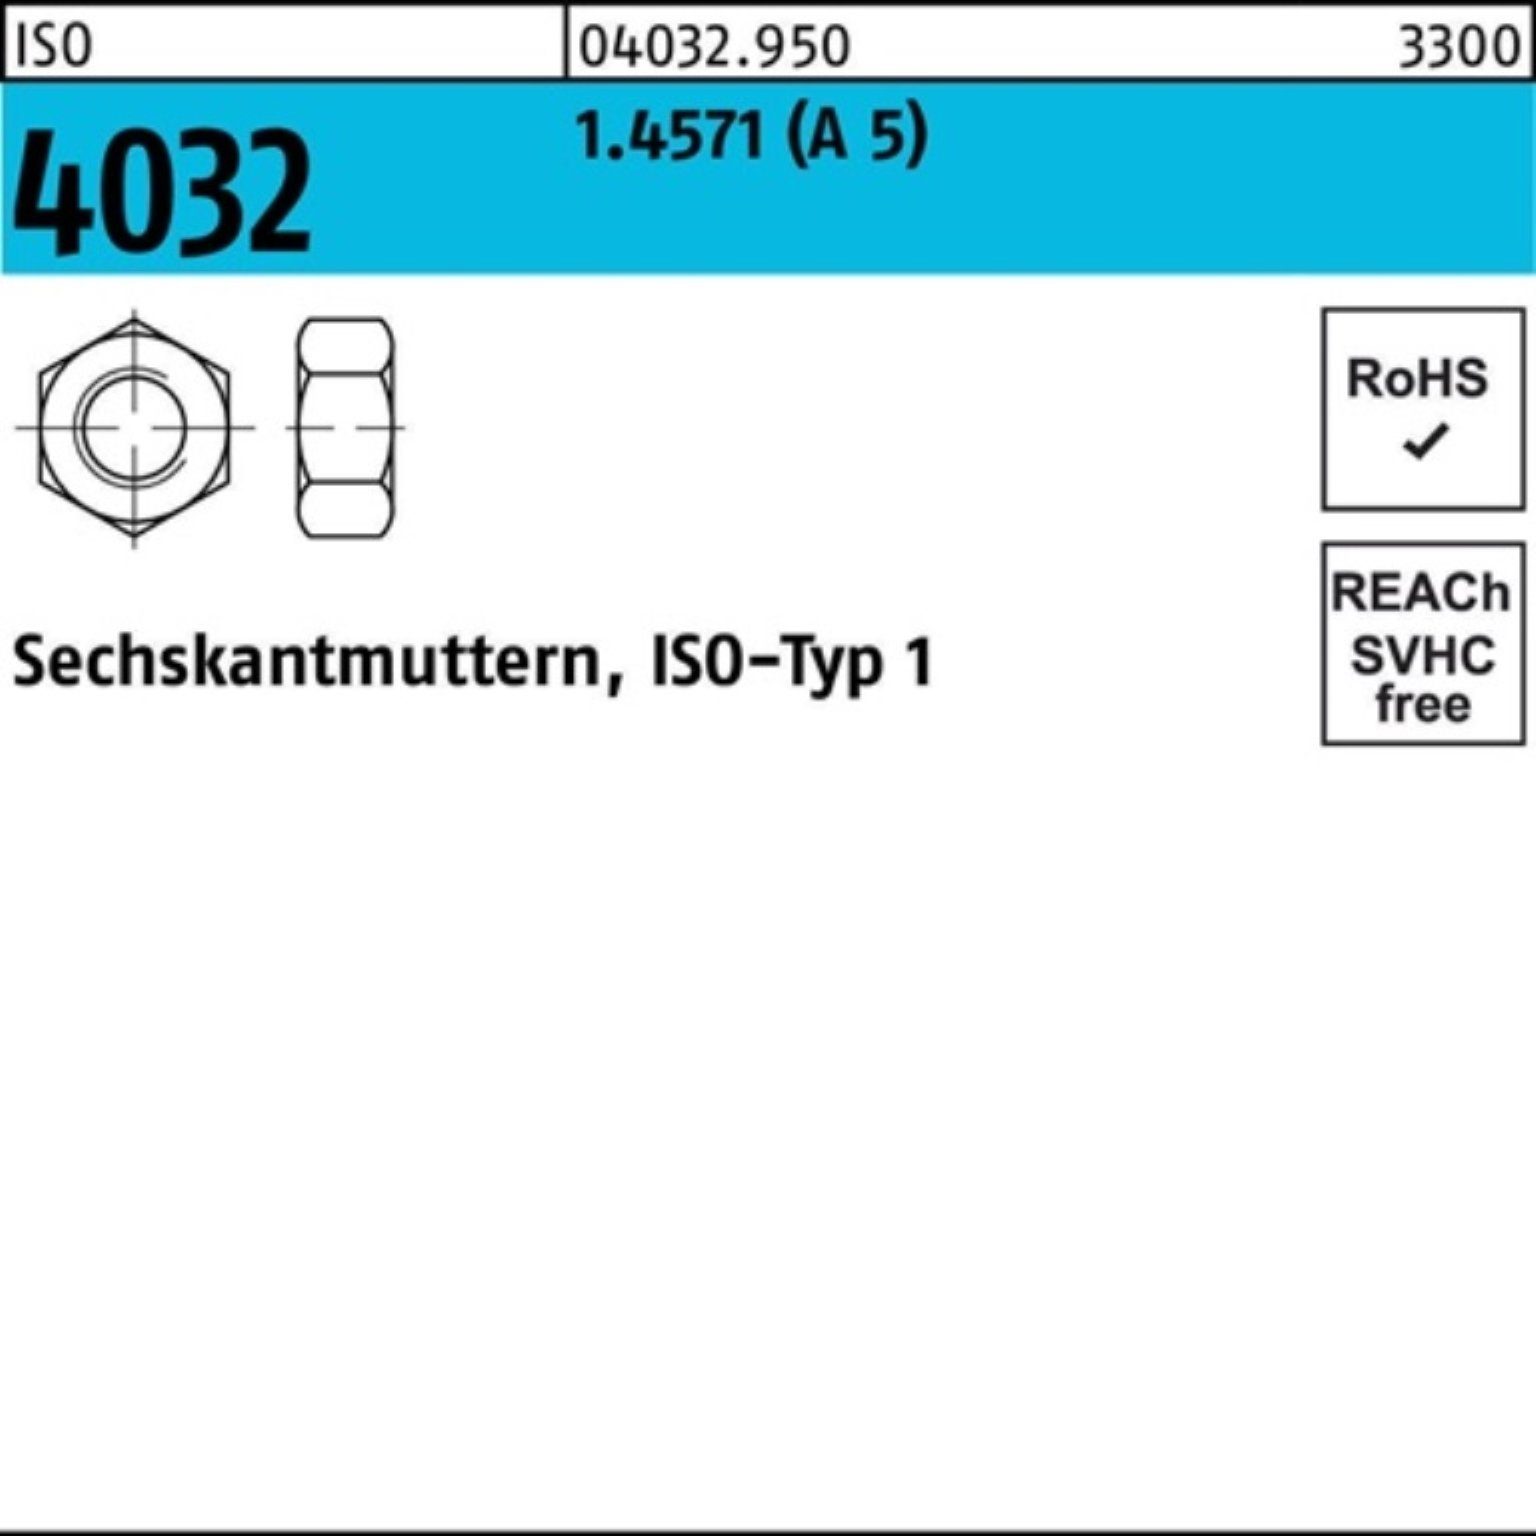 Bufab Muttern 100er M10 Sechskantmutter ISO 4032 100 ISO 1.4571 A 5 Stück Pack 4032